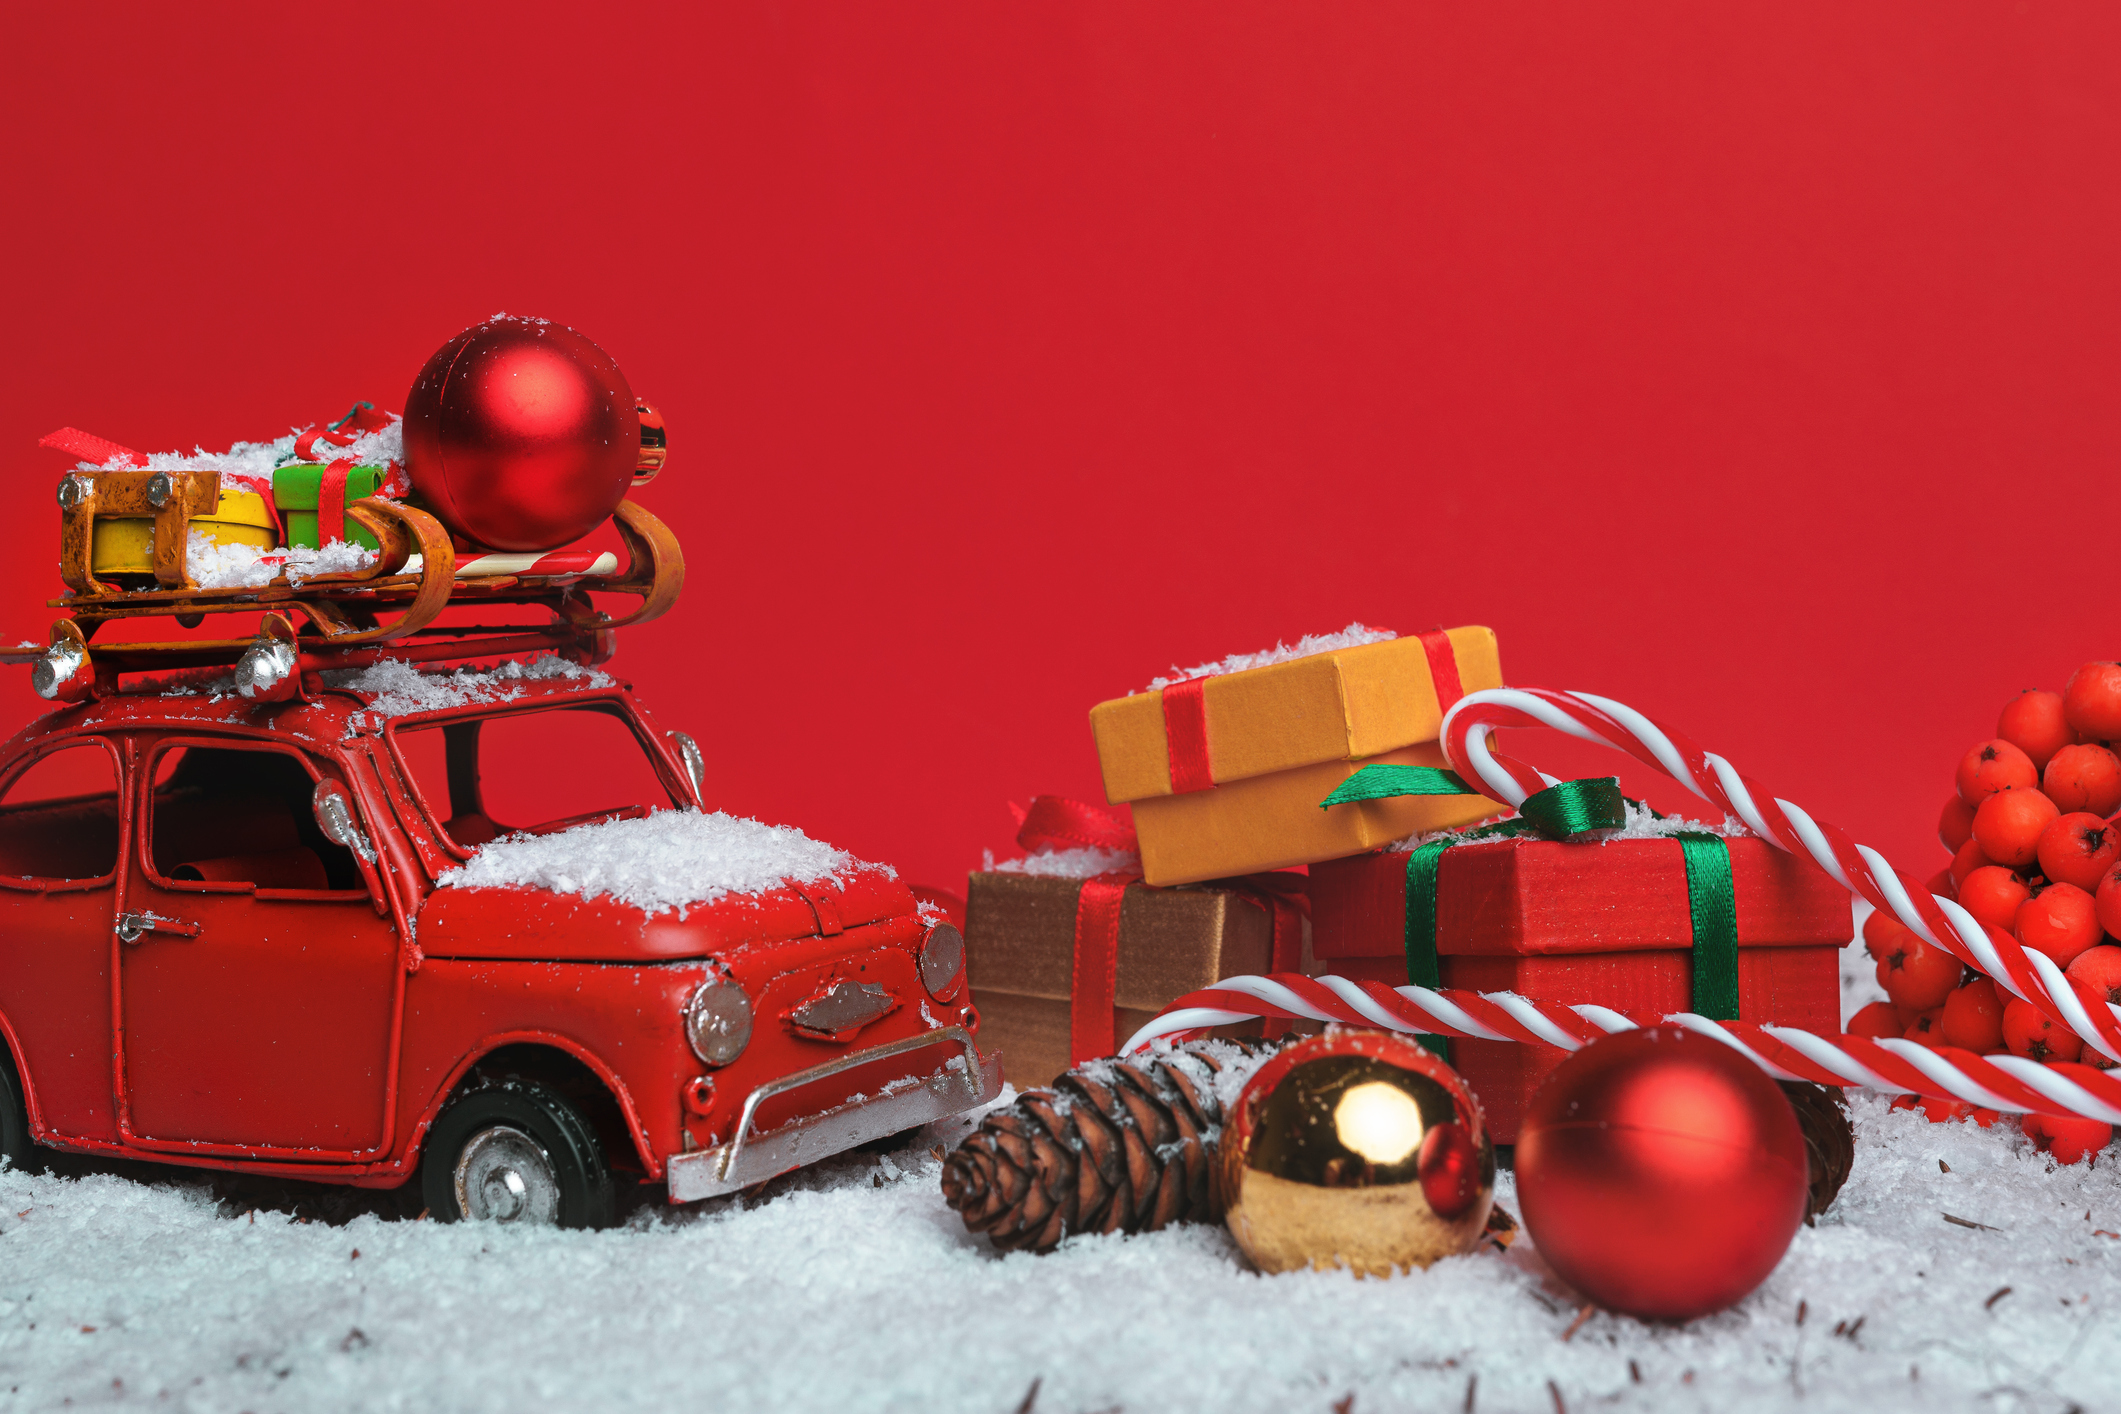 Managing Vehicle Overloading During the Holidays